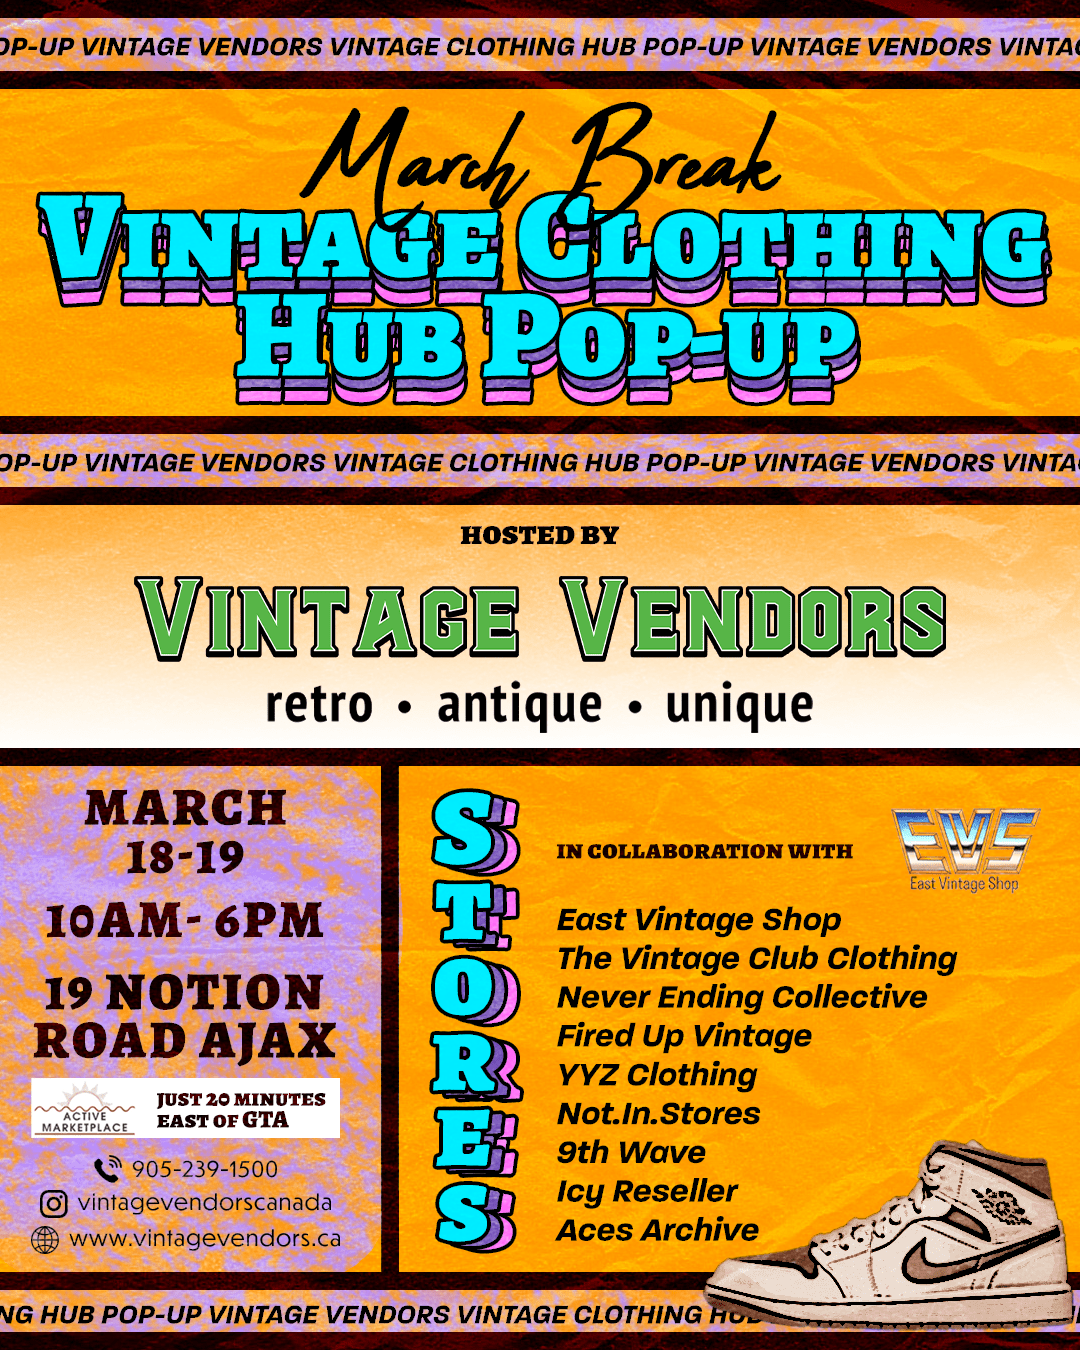 Vintage Vendors March Break Vintage Clothing Hub Pop-up